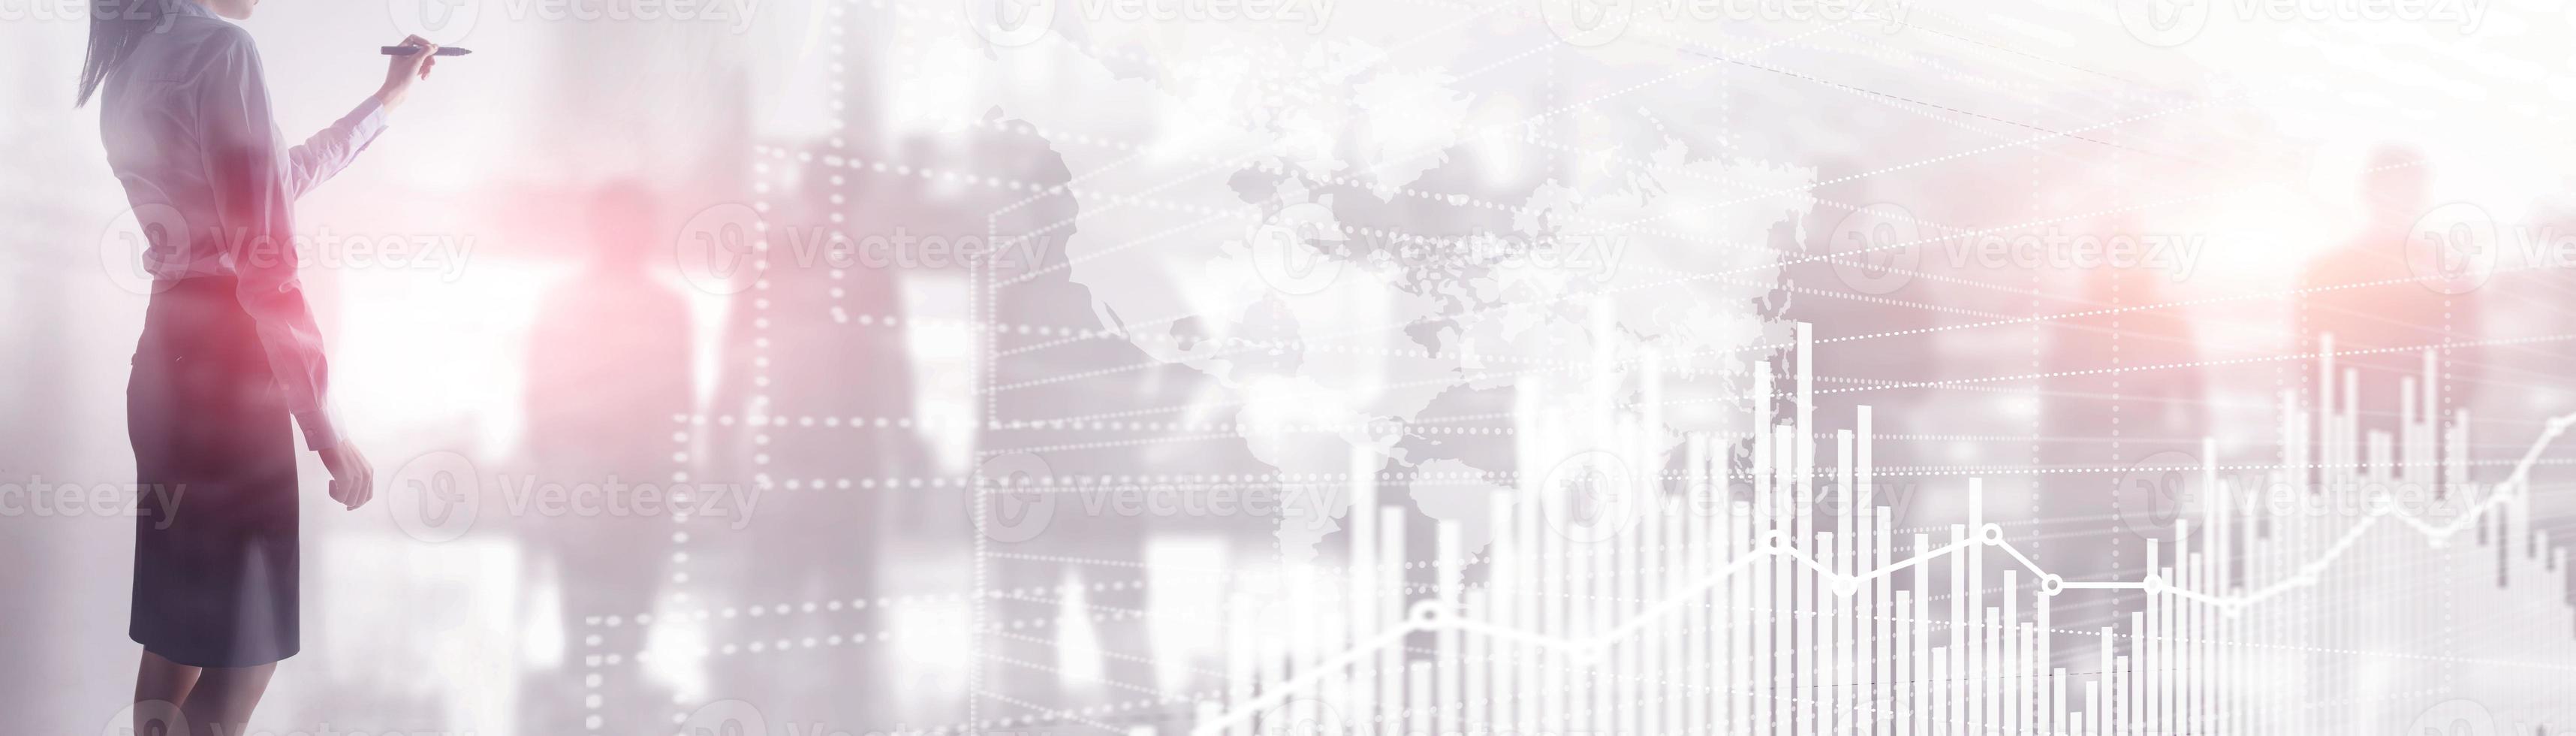 interface de tecnologia financeira futura. gráfico gráfico do mercado de ações. mapa-múndi na tela virtual. banner do site. foto